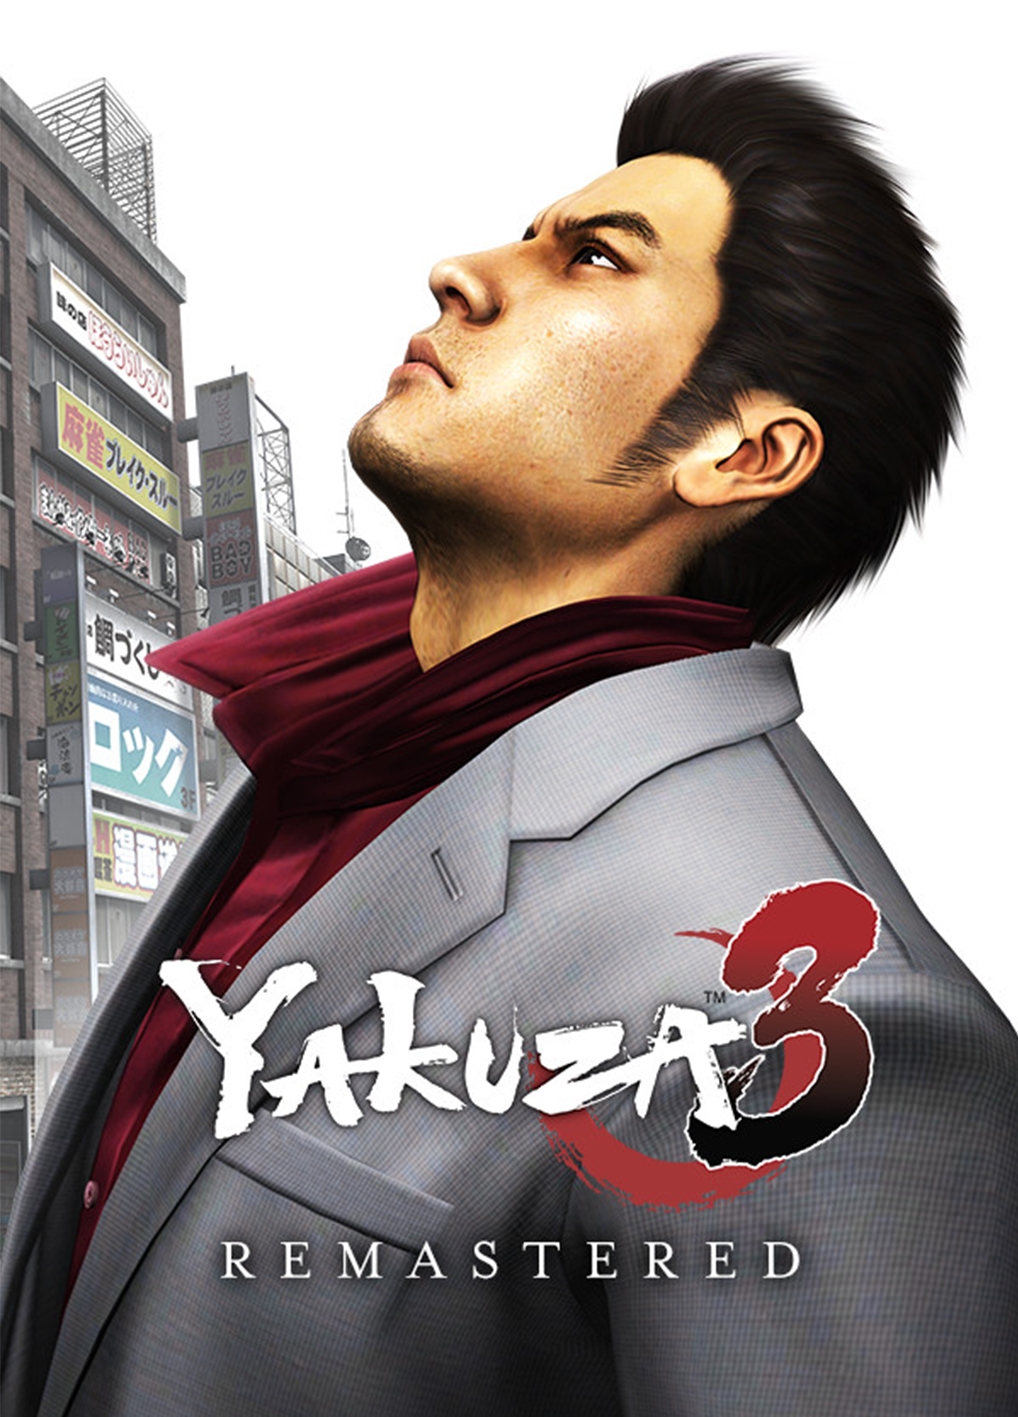 jaquette du jeu vidéo Yakuza 3 Remastered